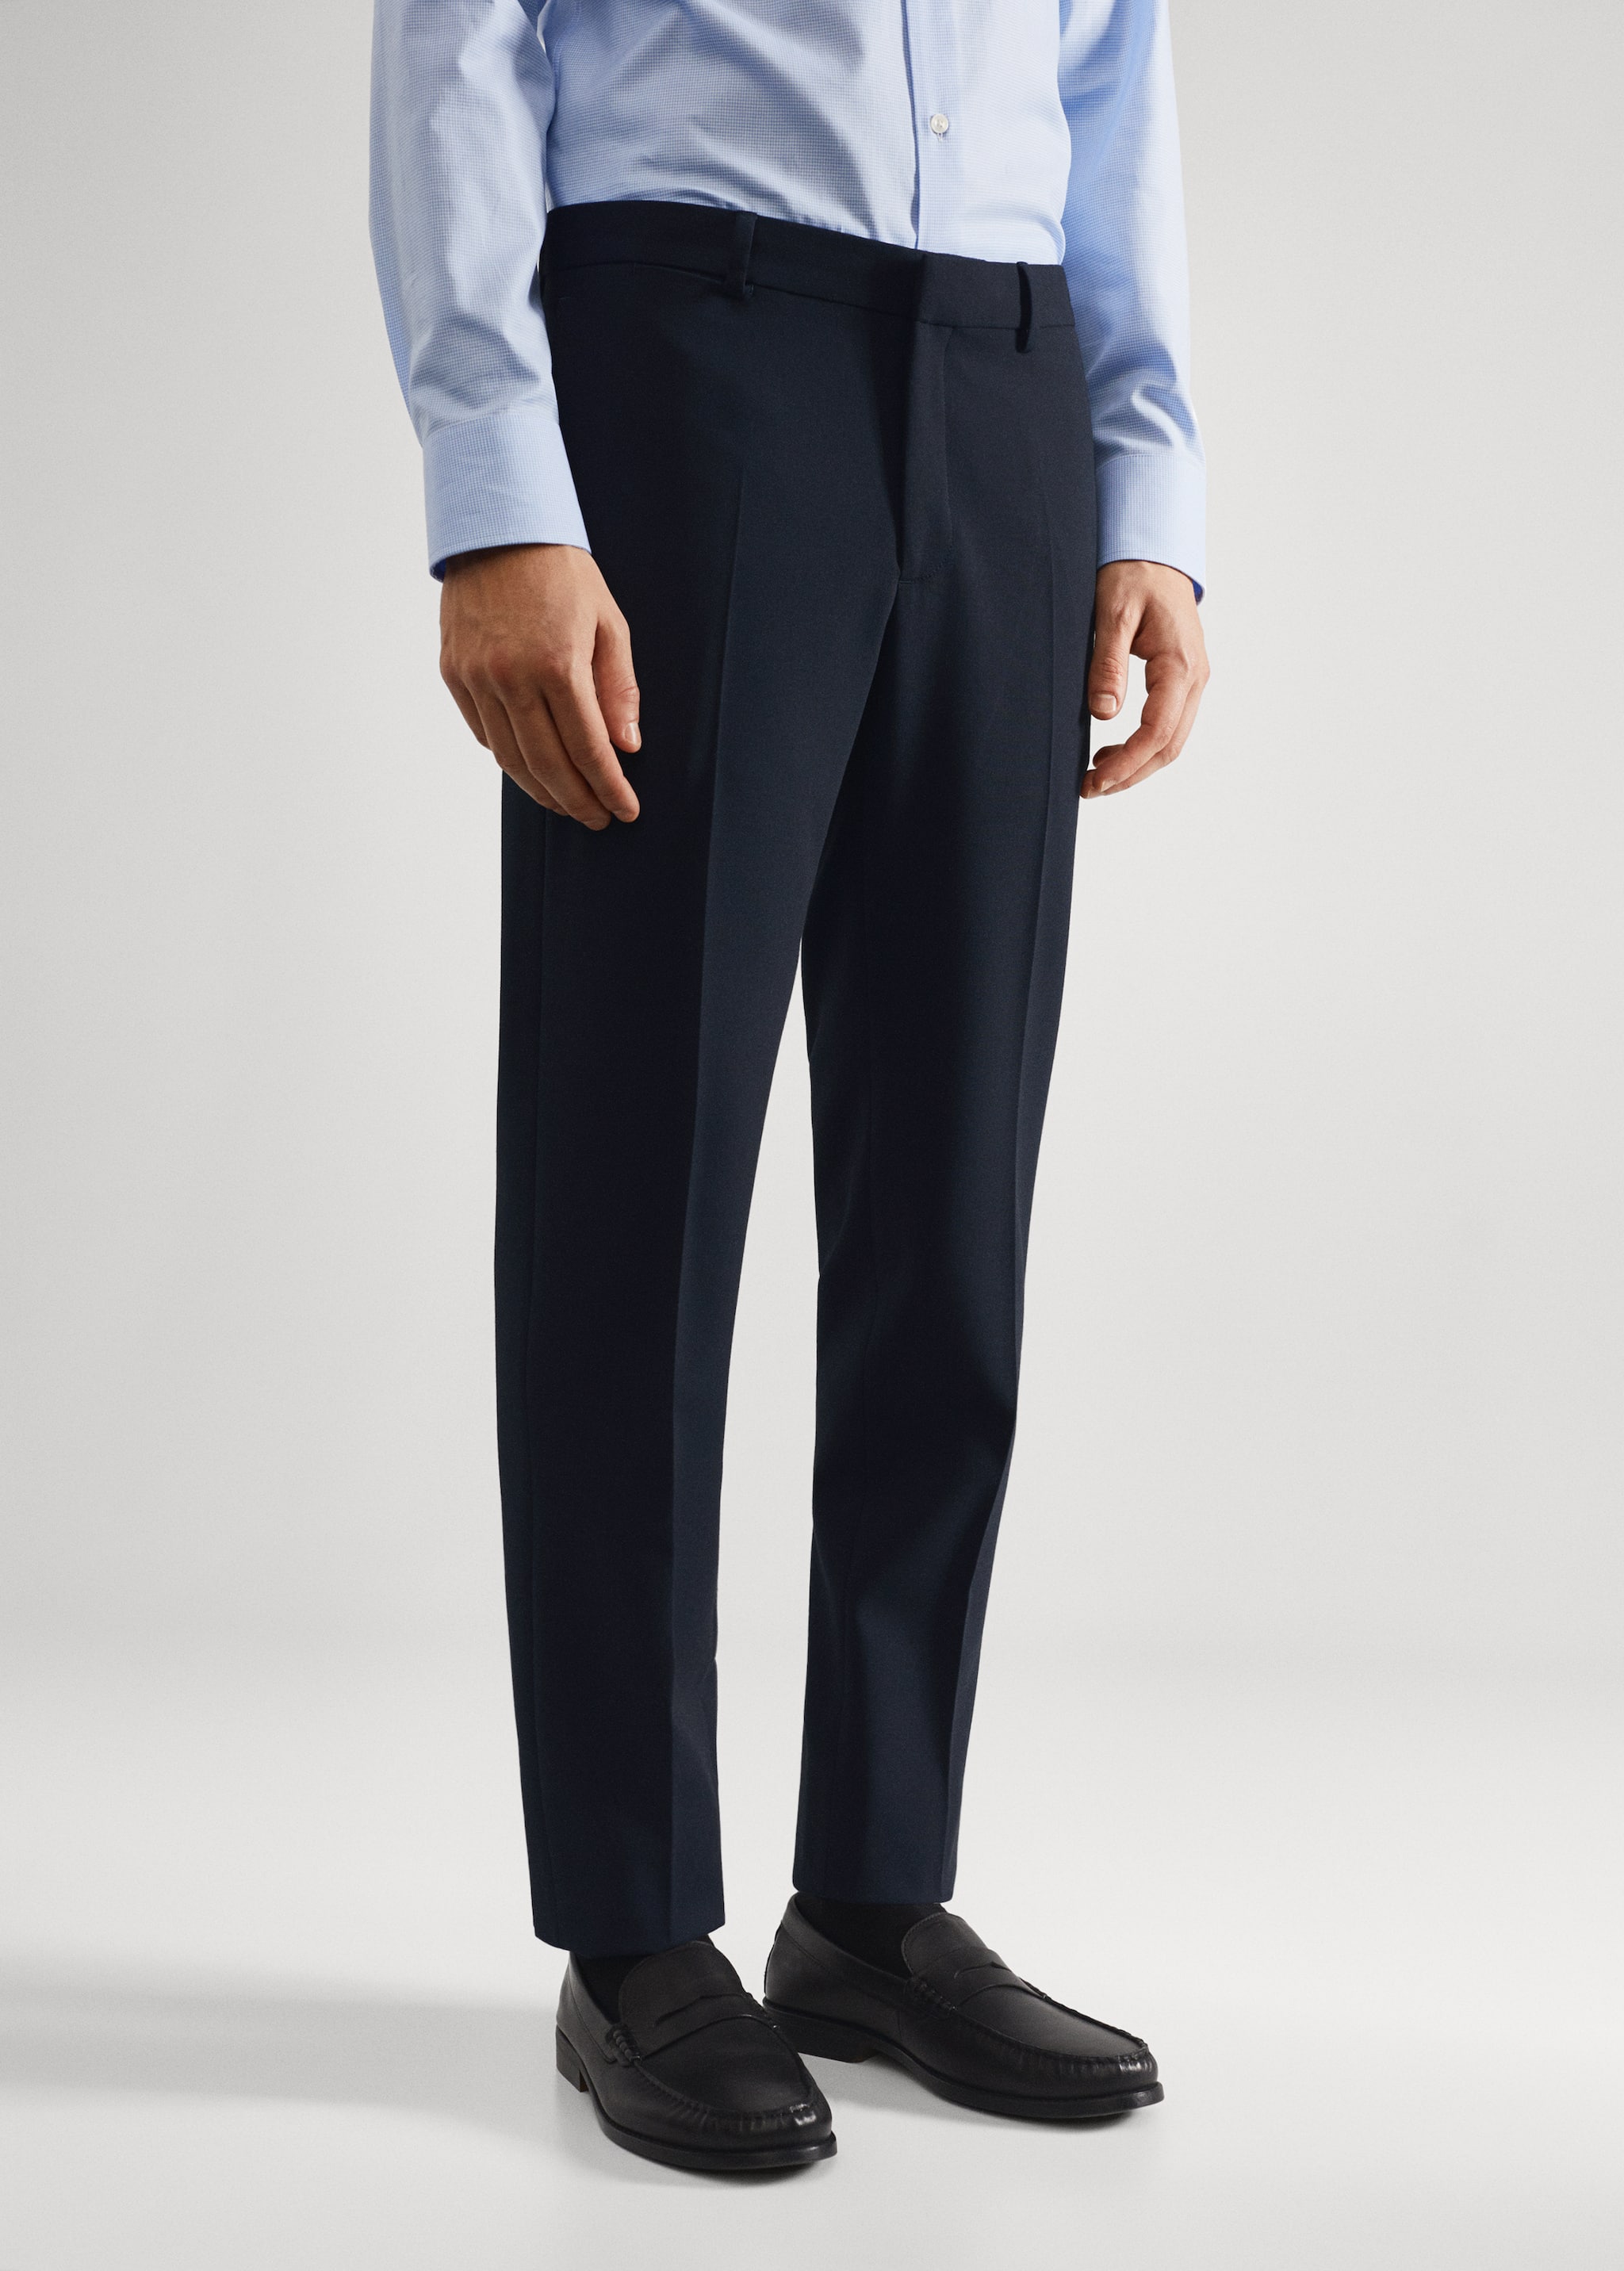 Super slim fit suit pants - Medium plane